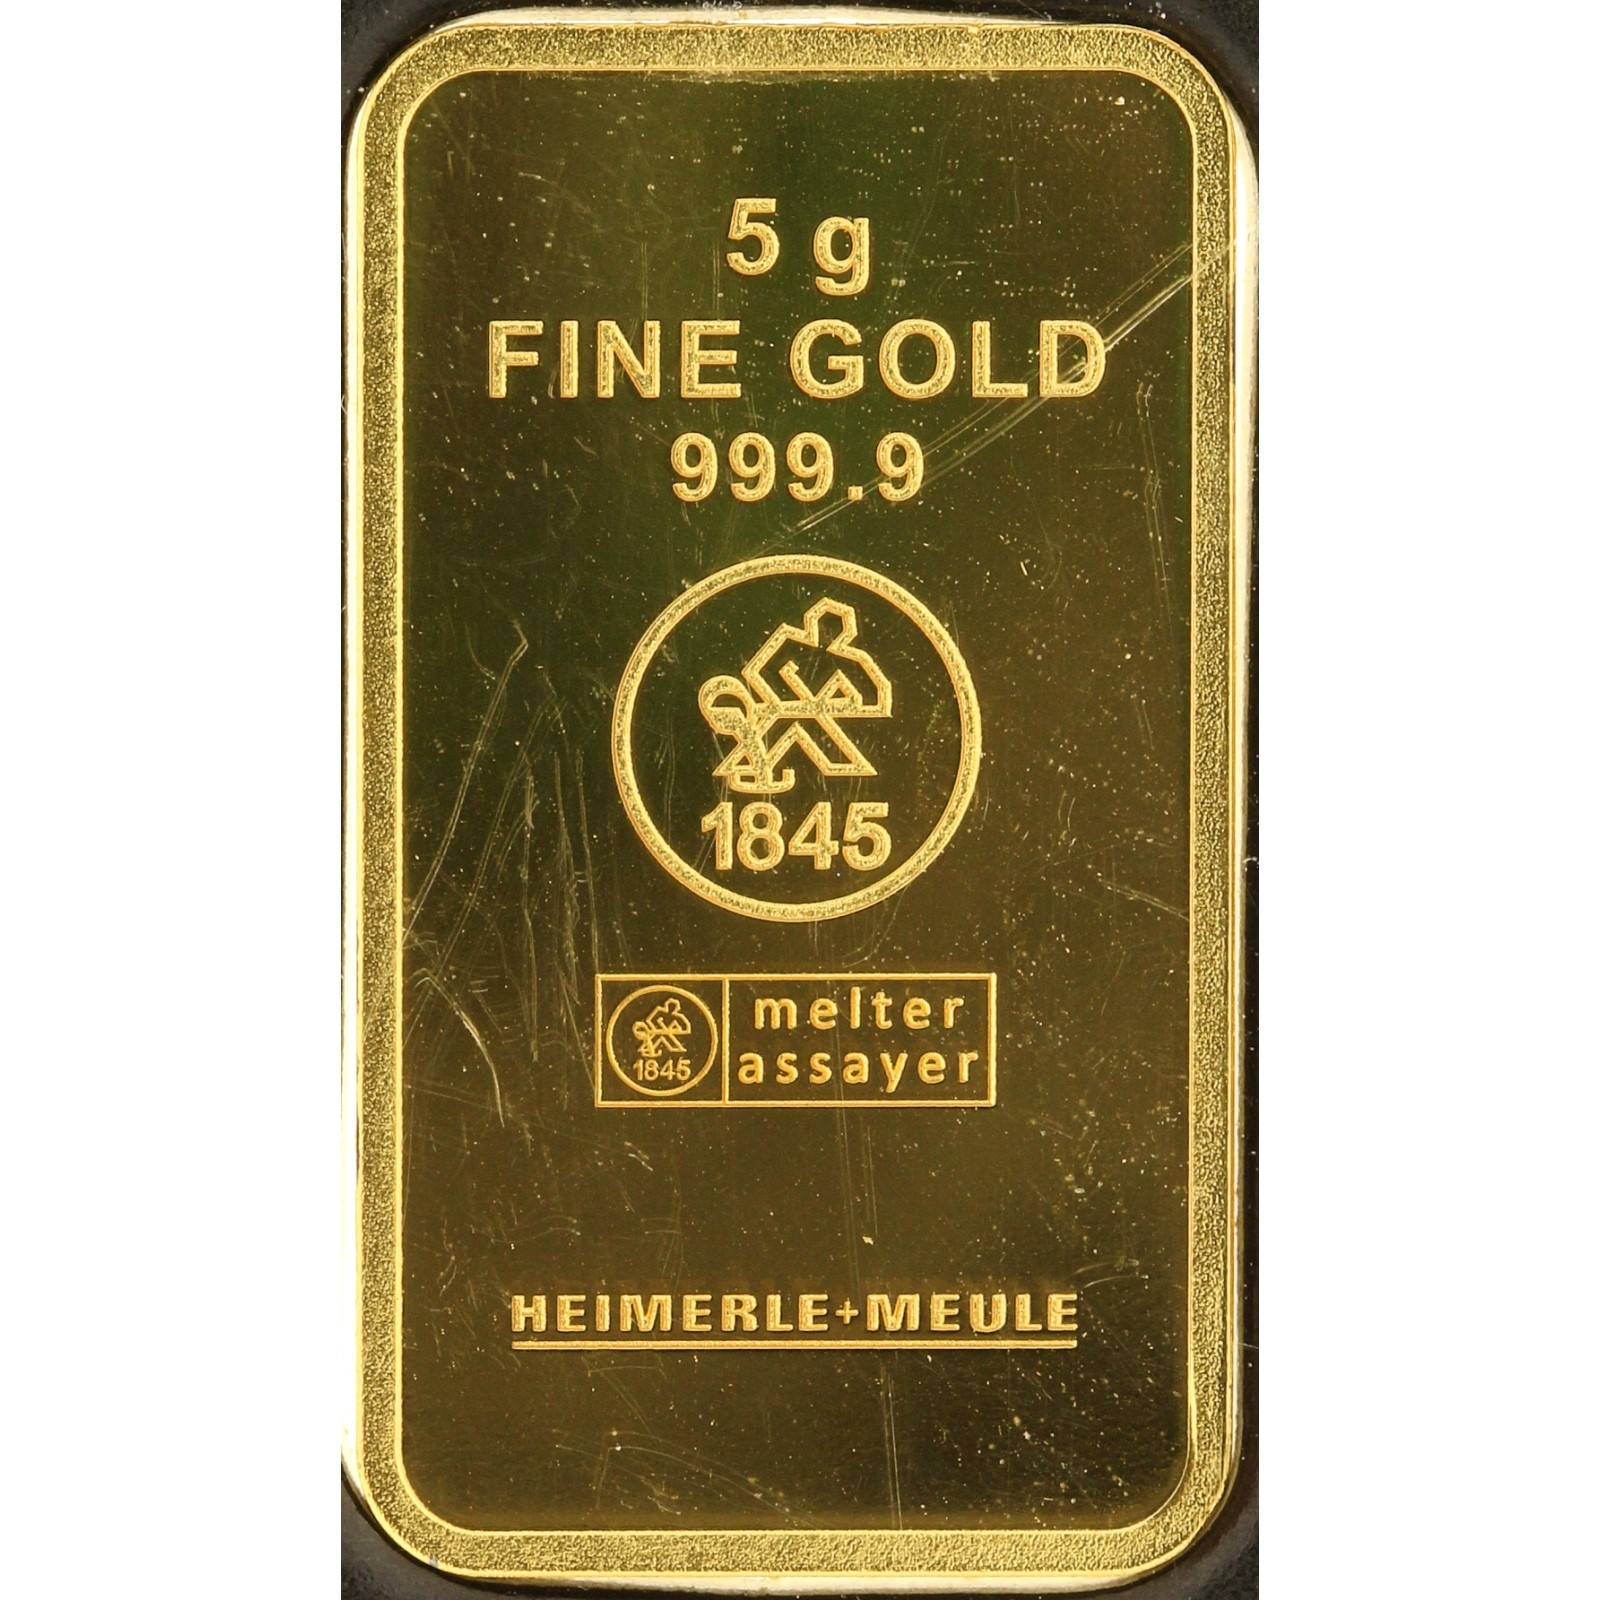 Heimerle Meule - 5 gram - fine gold - bar